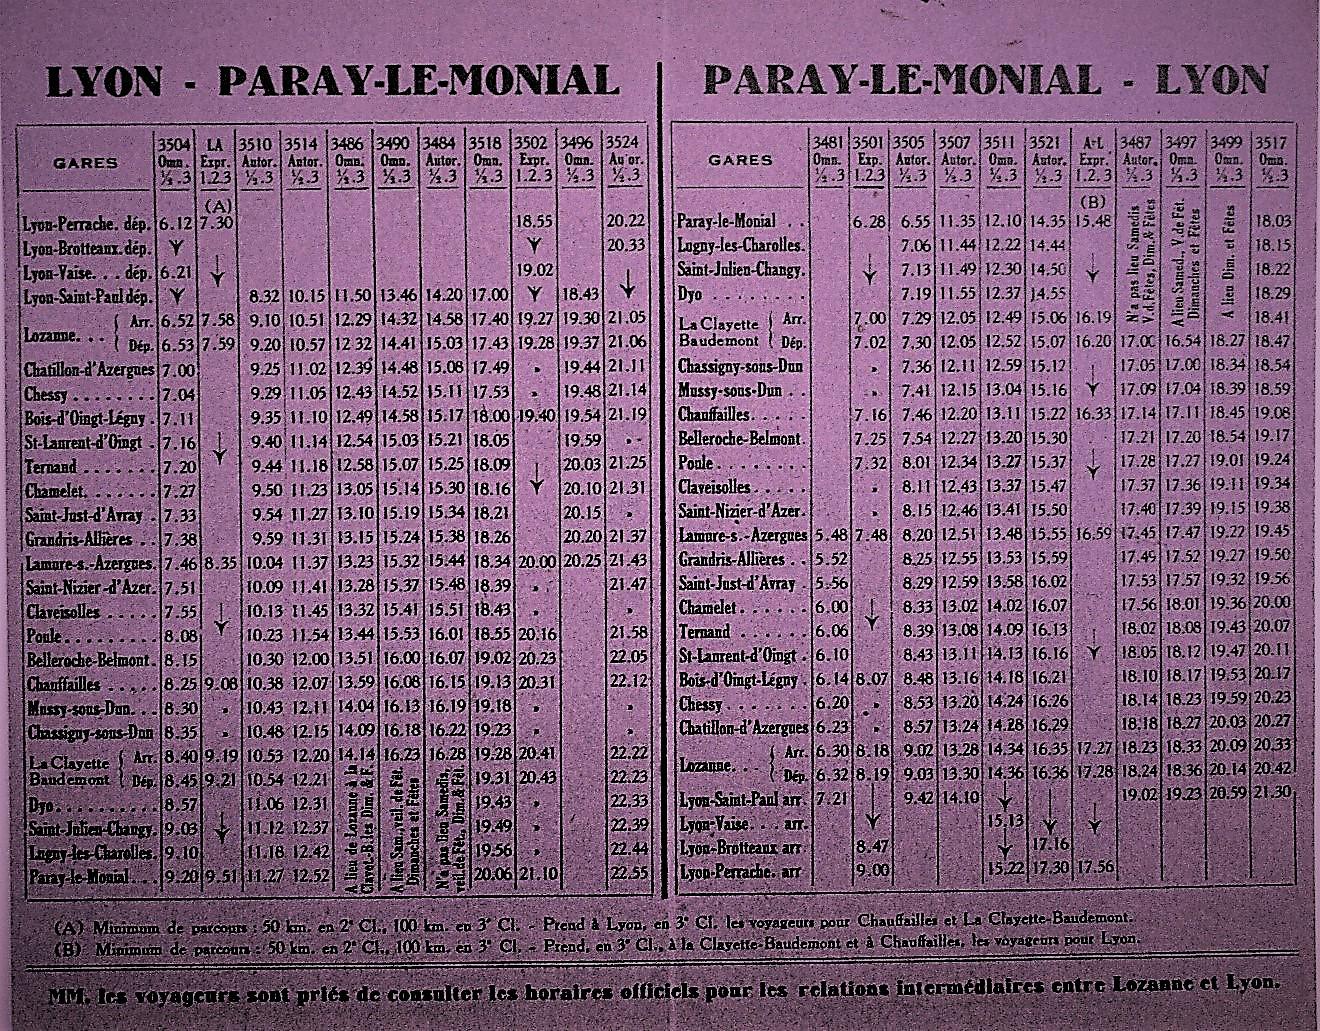 1938 rail timetable